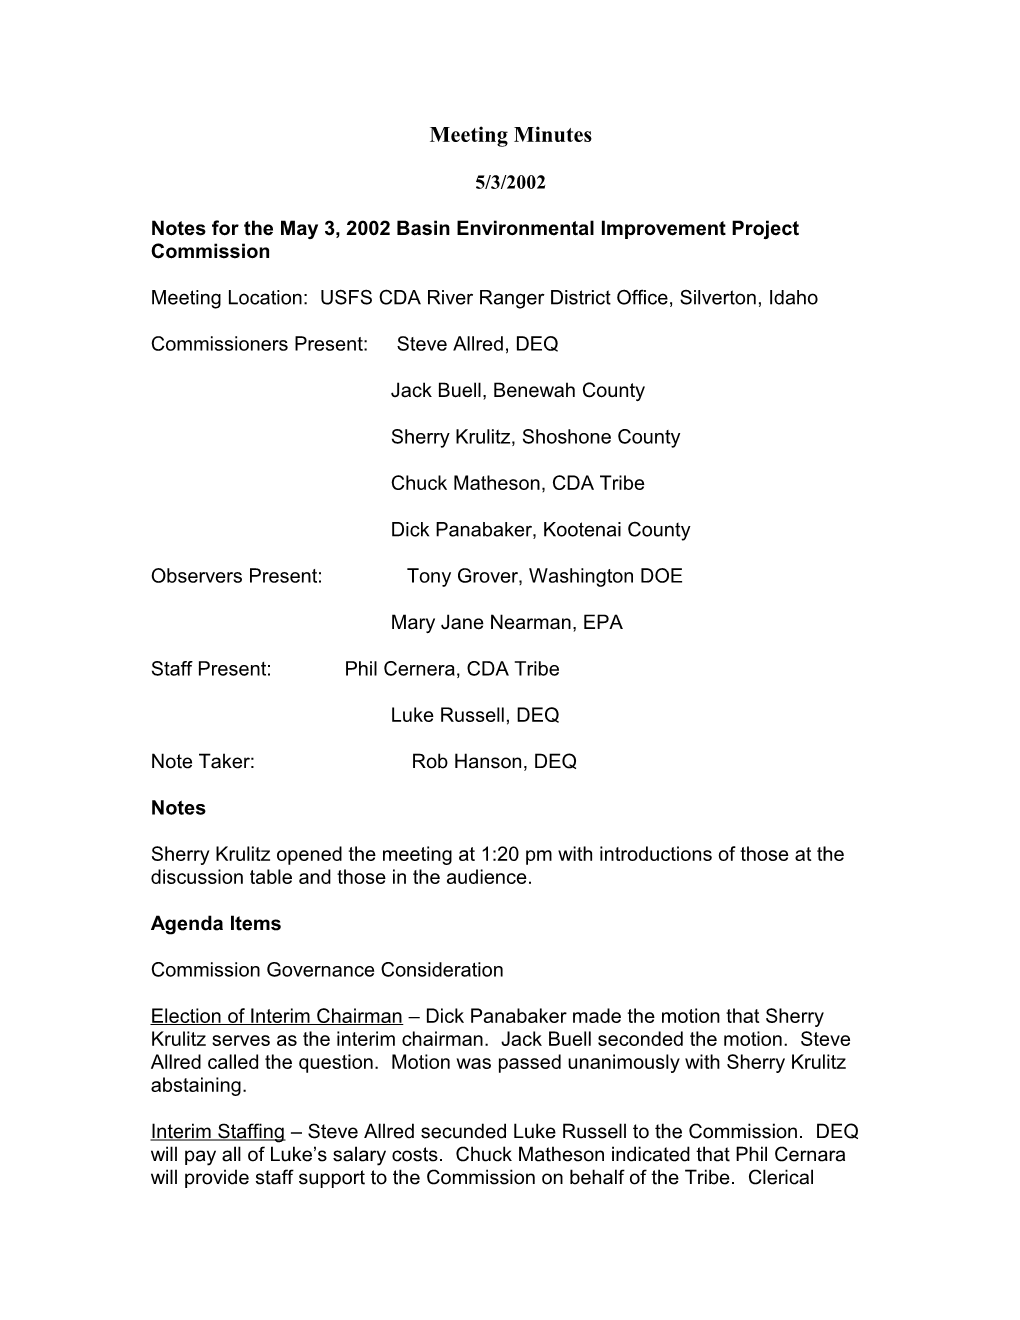 May 3, 2002 BEIPC Meeting Minutes